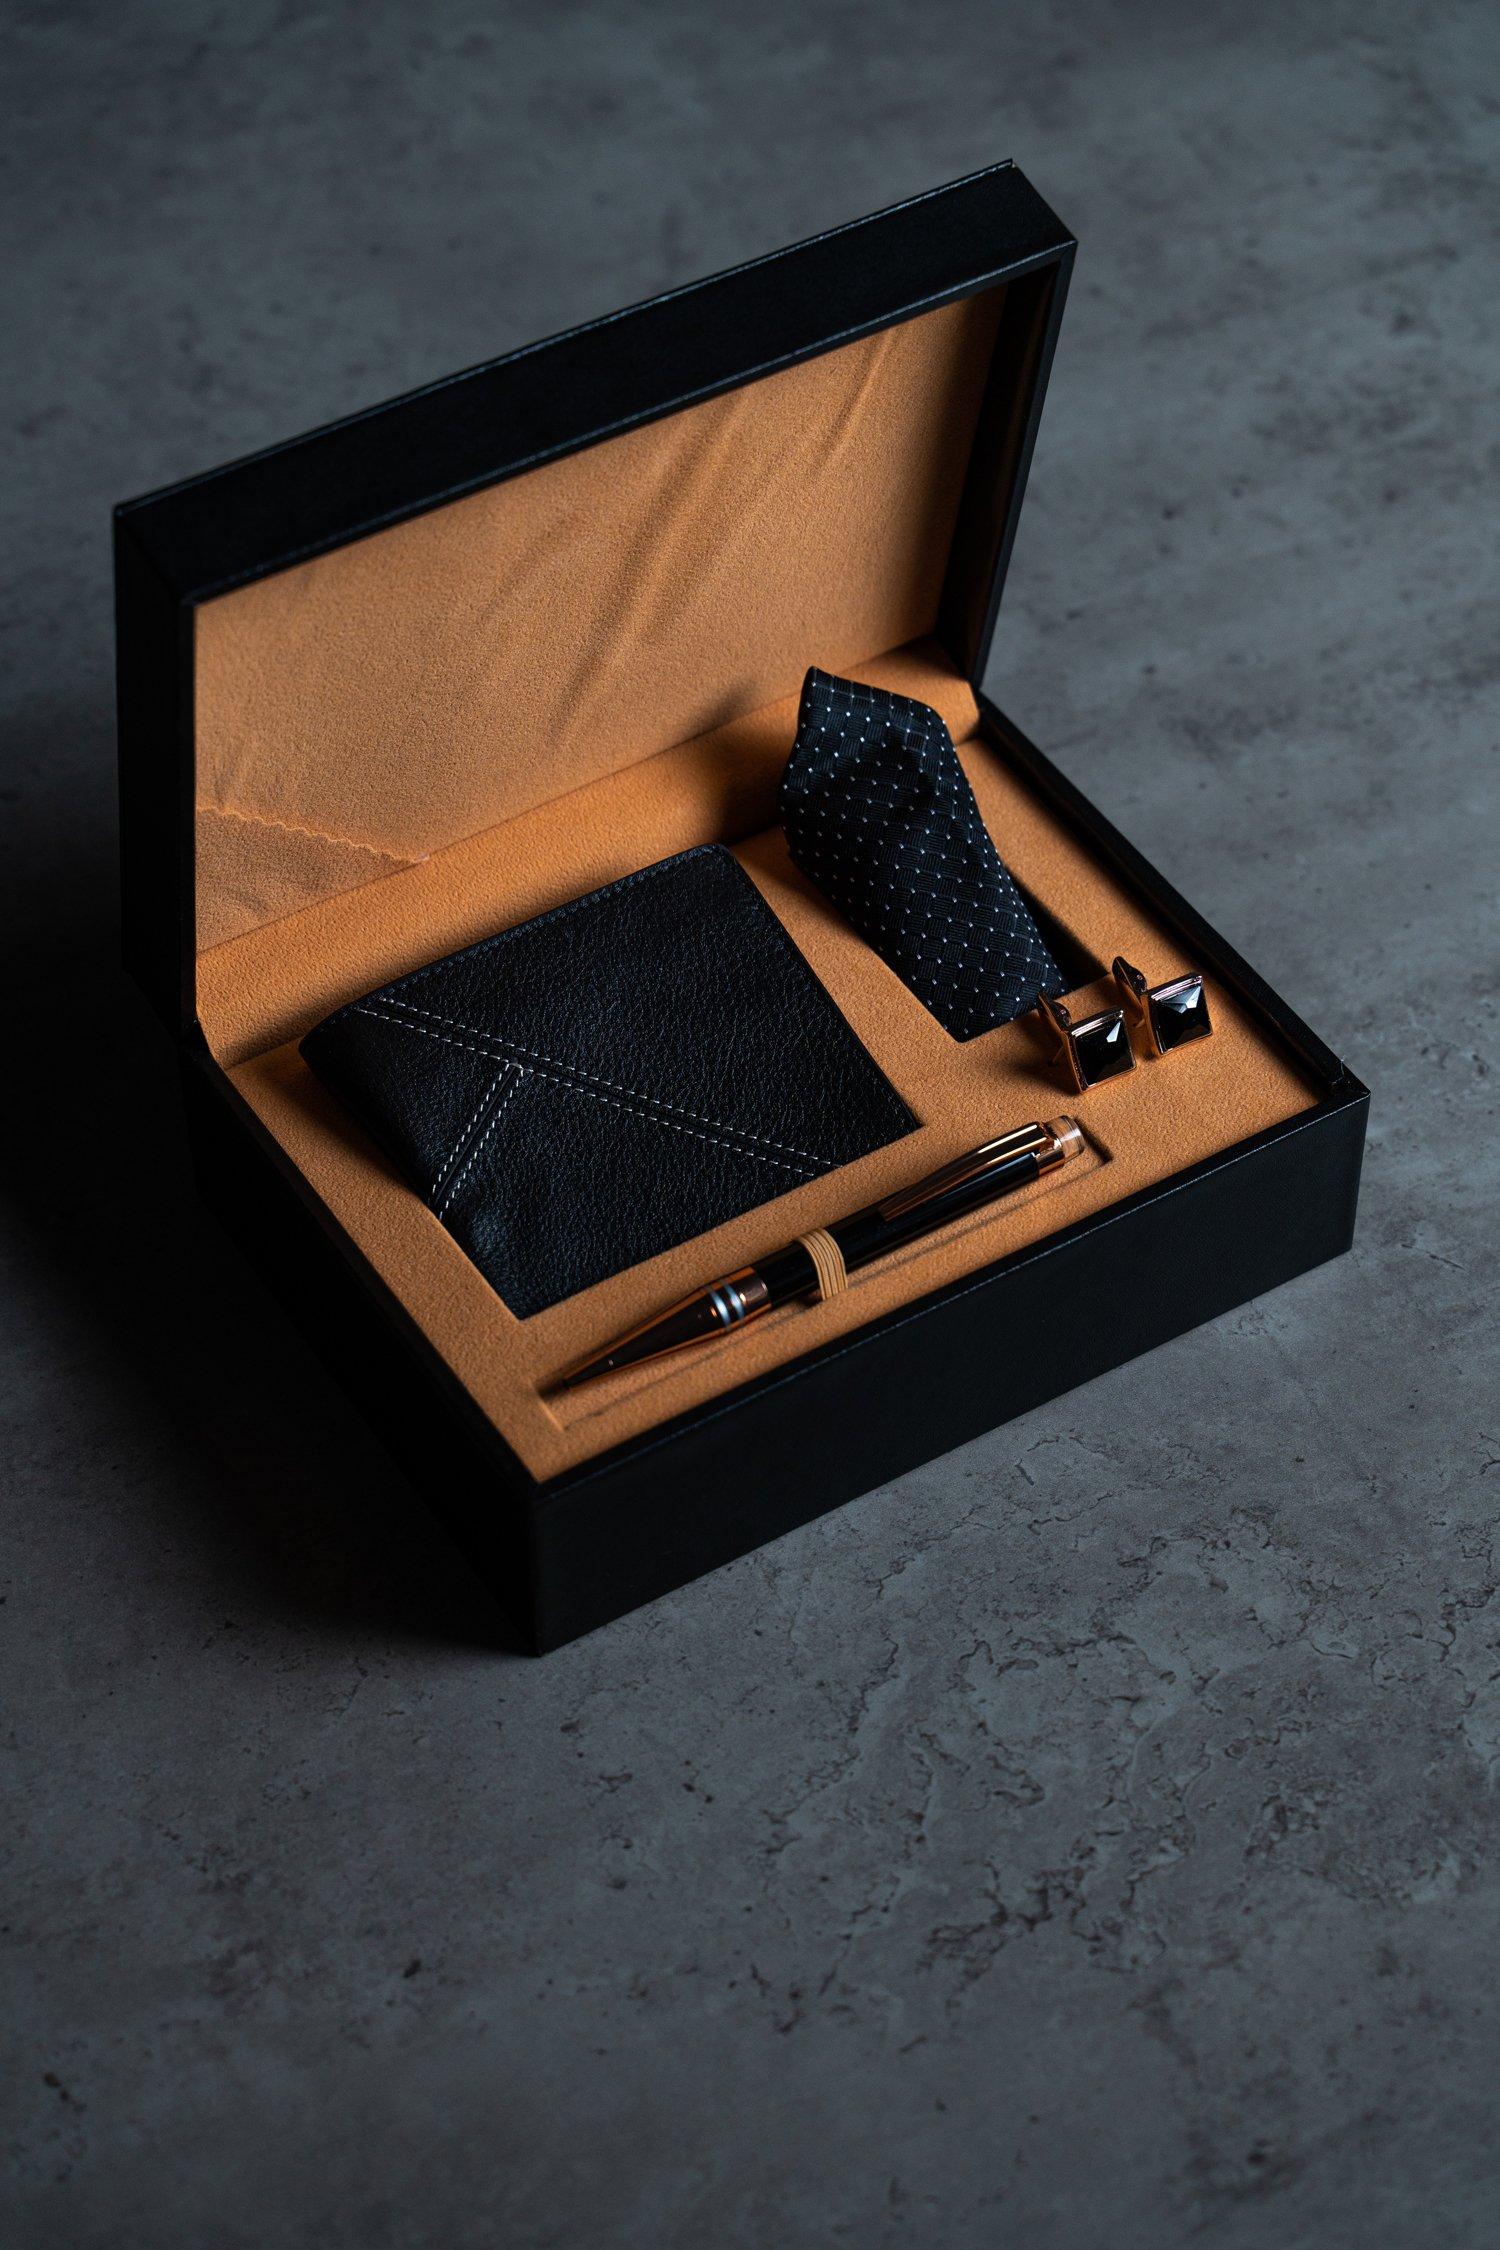 STARHIDE Men's Designer Luxury Soft Tri Fold Leather Wallet Gift Boxed